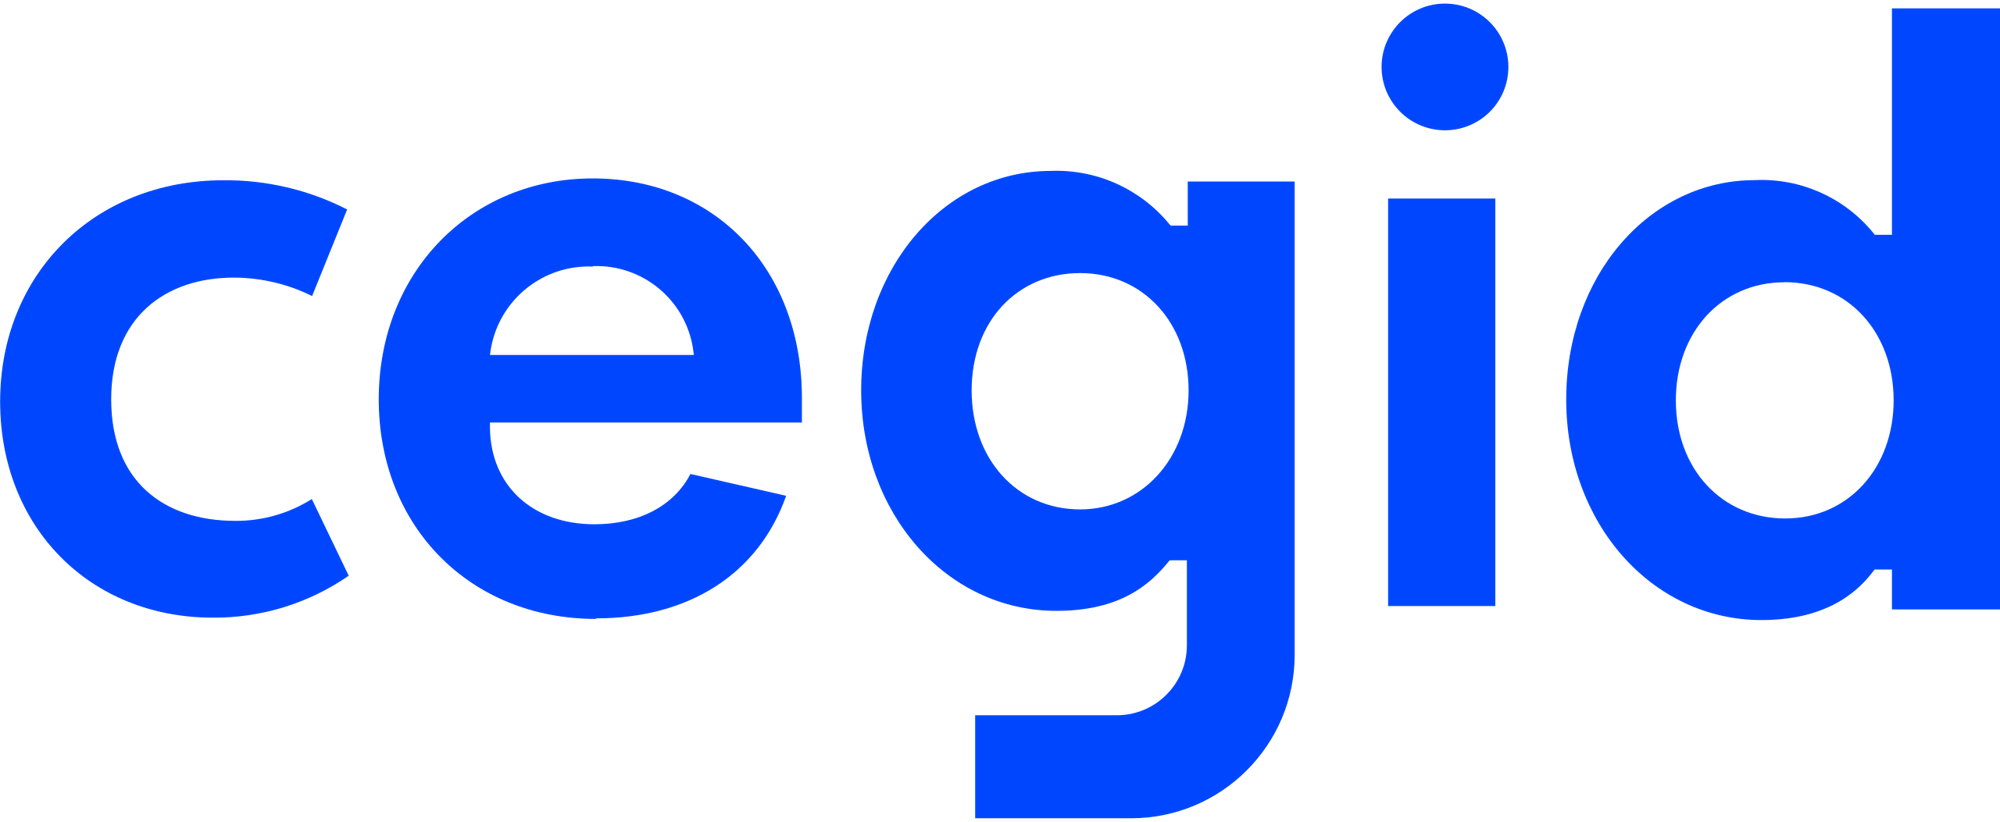 Cegid_logo_2018.svg